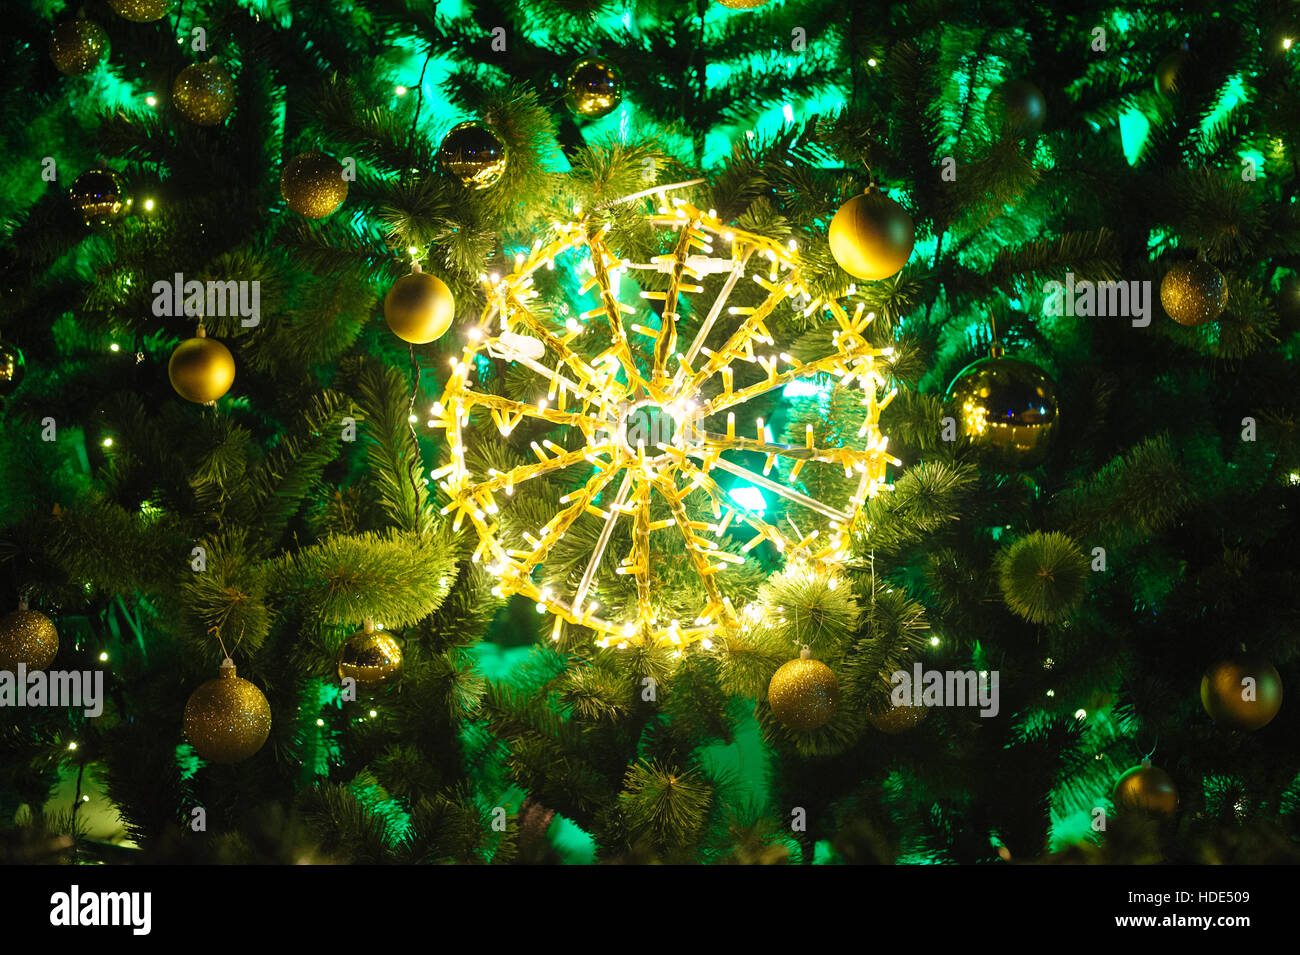 illuminated Christmas tree decoration with balloons Stock Photo